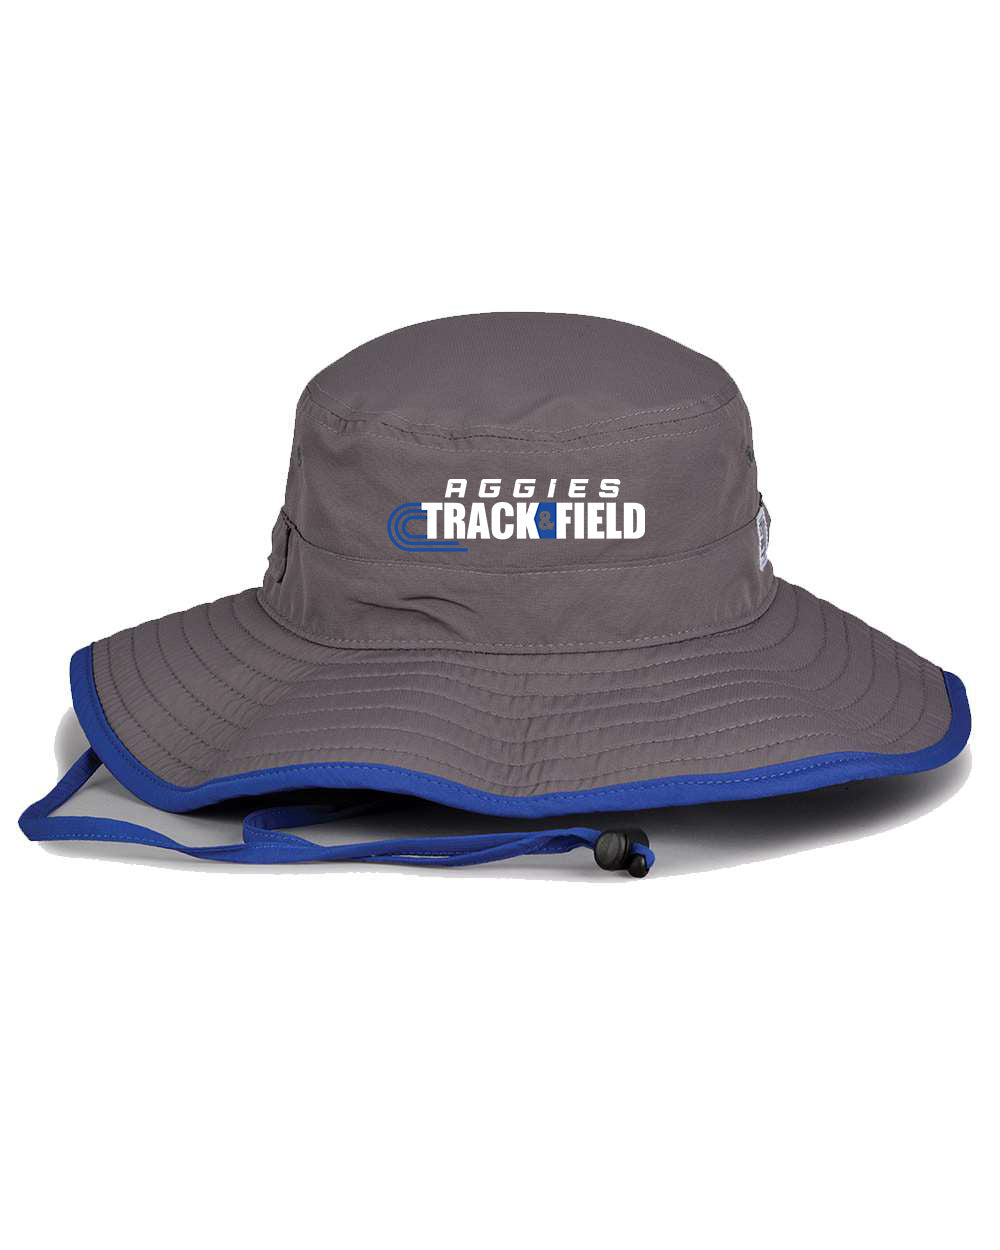 Aggies Track Booney Bucket Hat